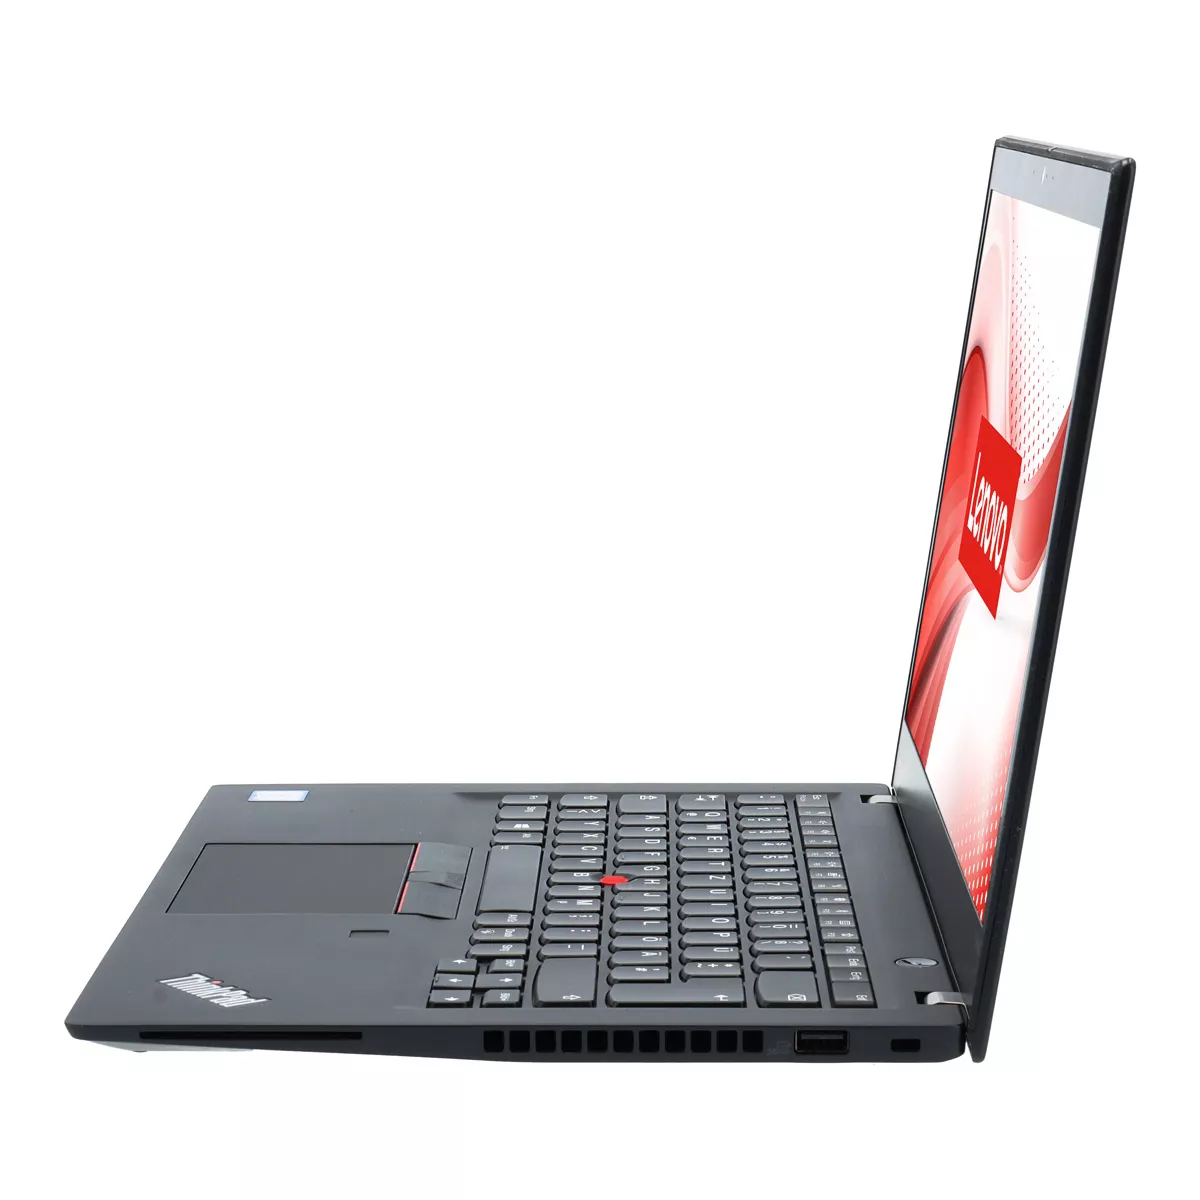 Lenovo ThinkPad T490s Core i5 8265U 8 GB 240 GB M.2 nVME SSD Touch Webcam A+